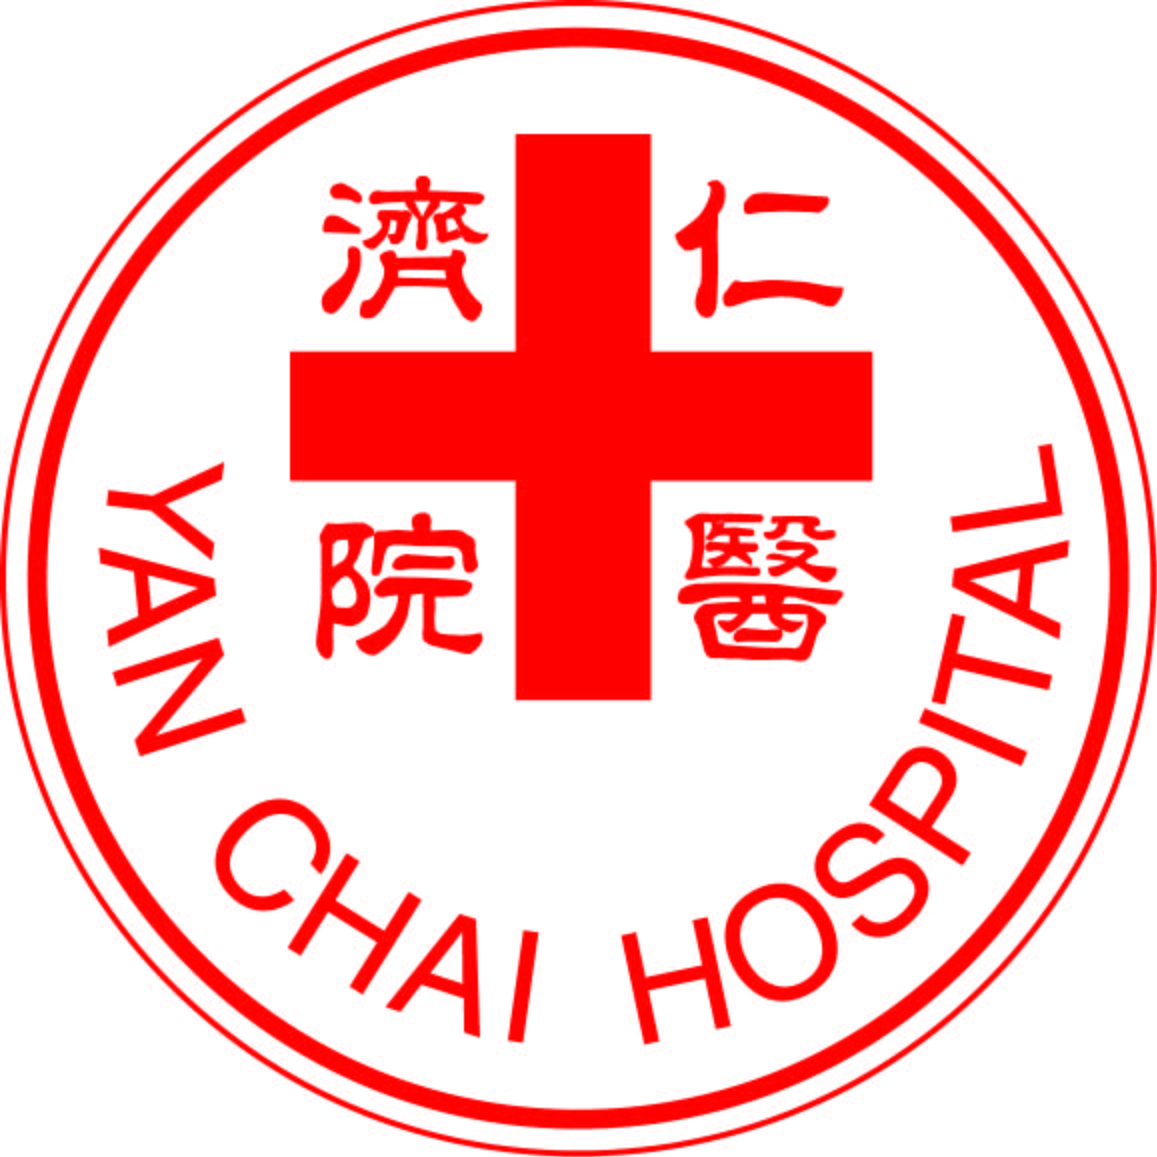 Yan Chai Hospital